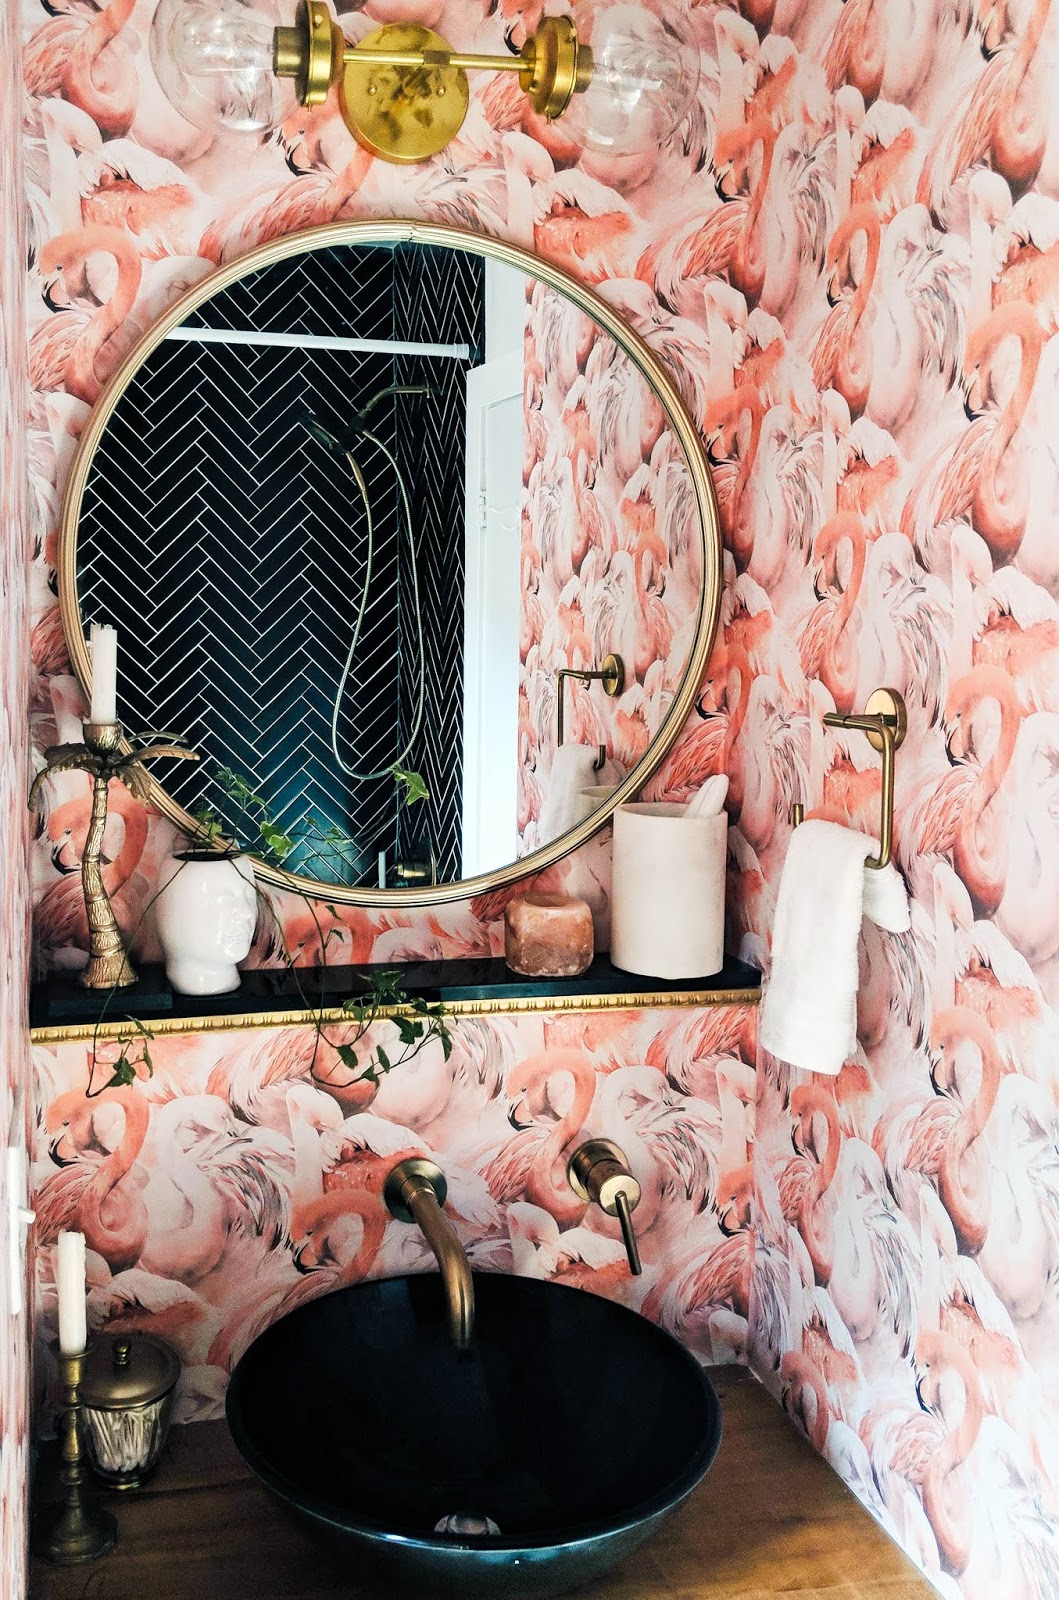 Retro Flamingo Wallpapers